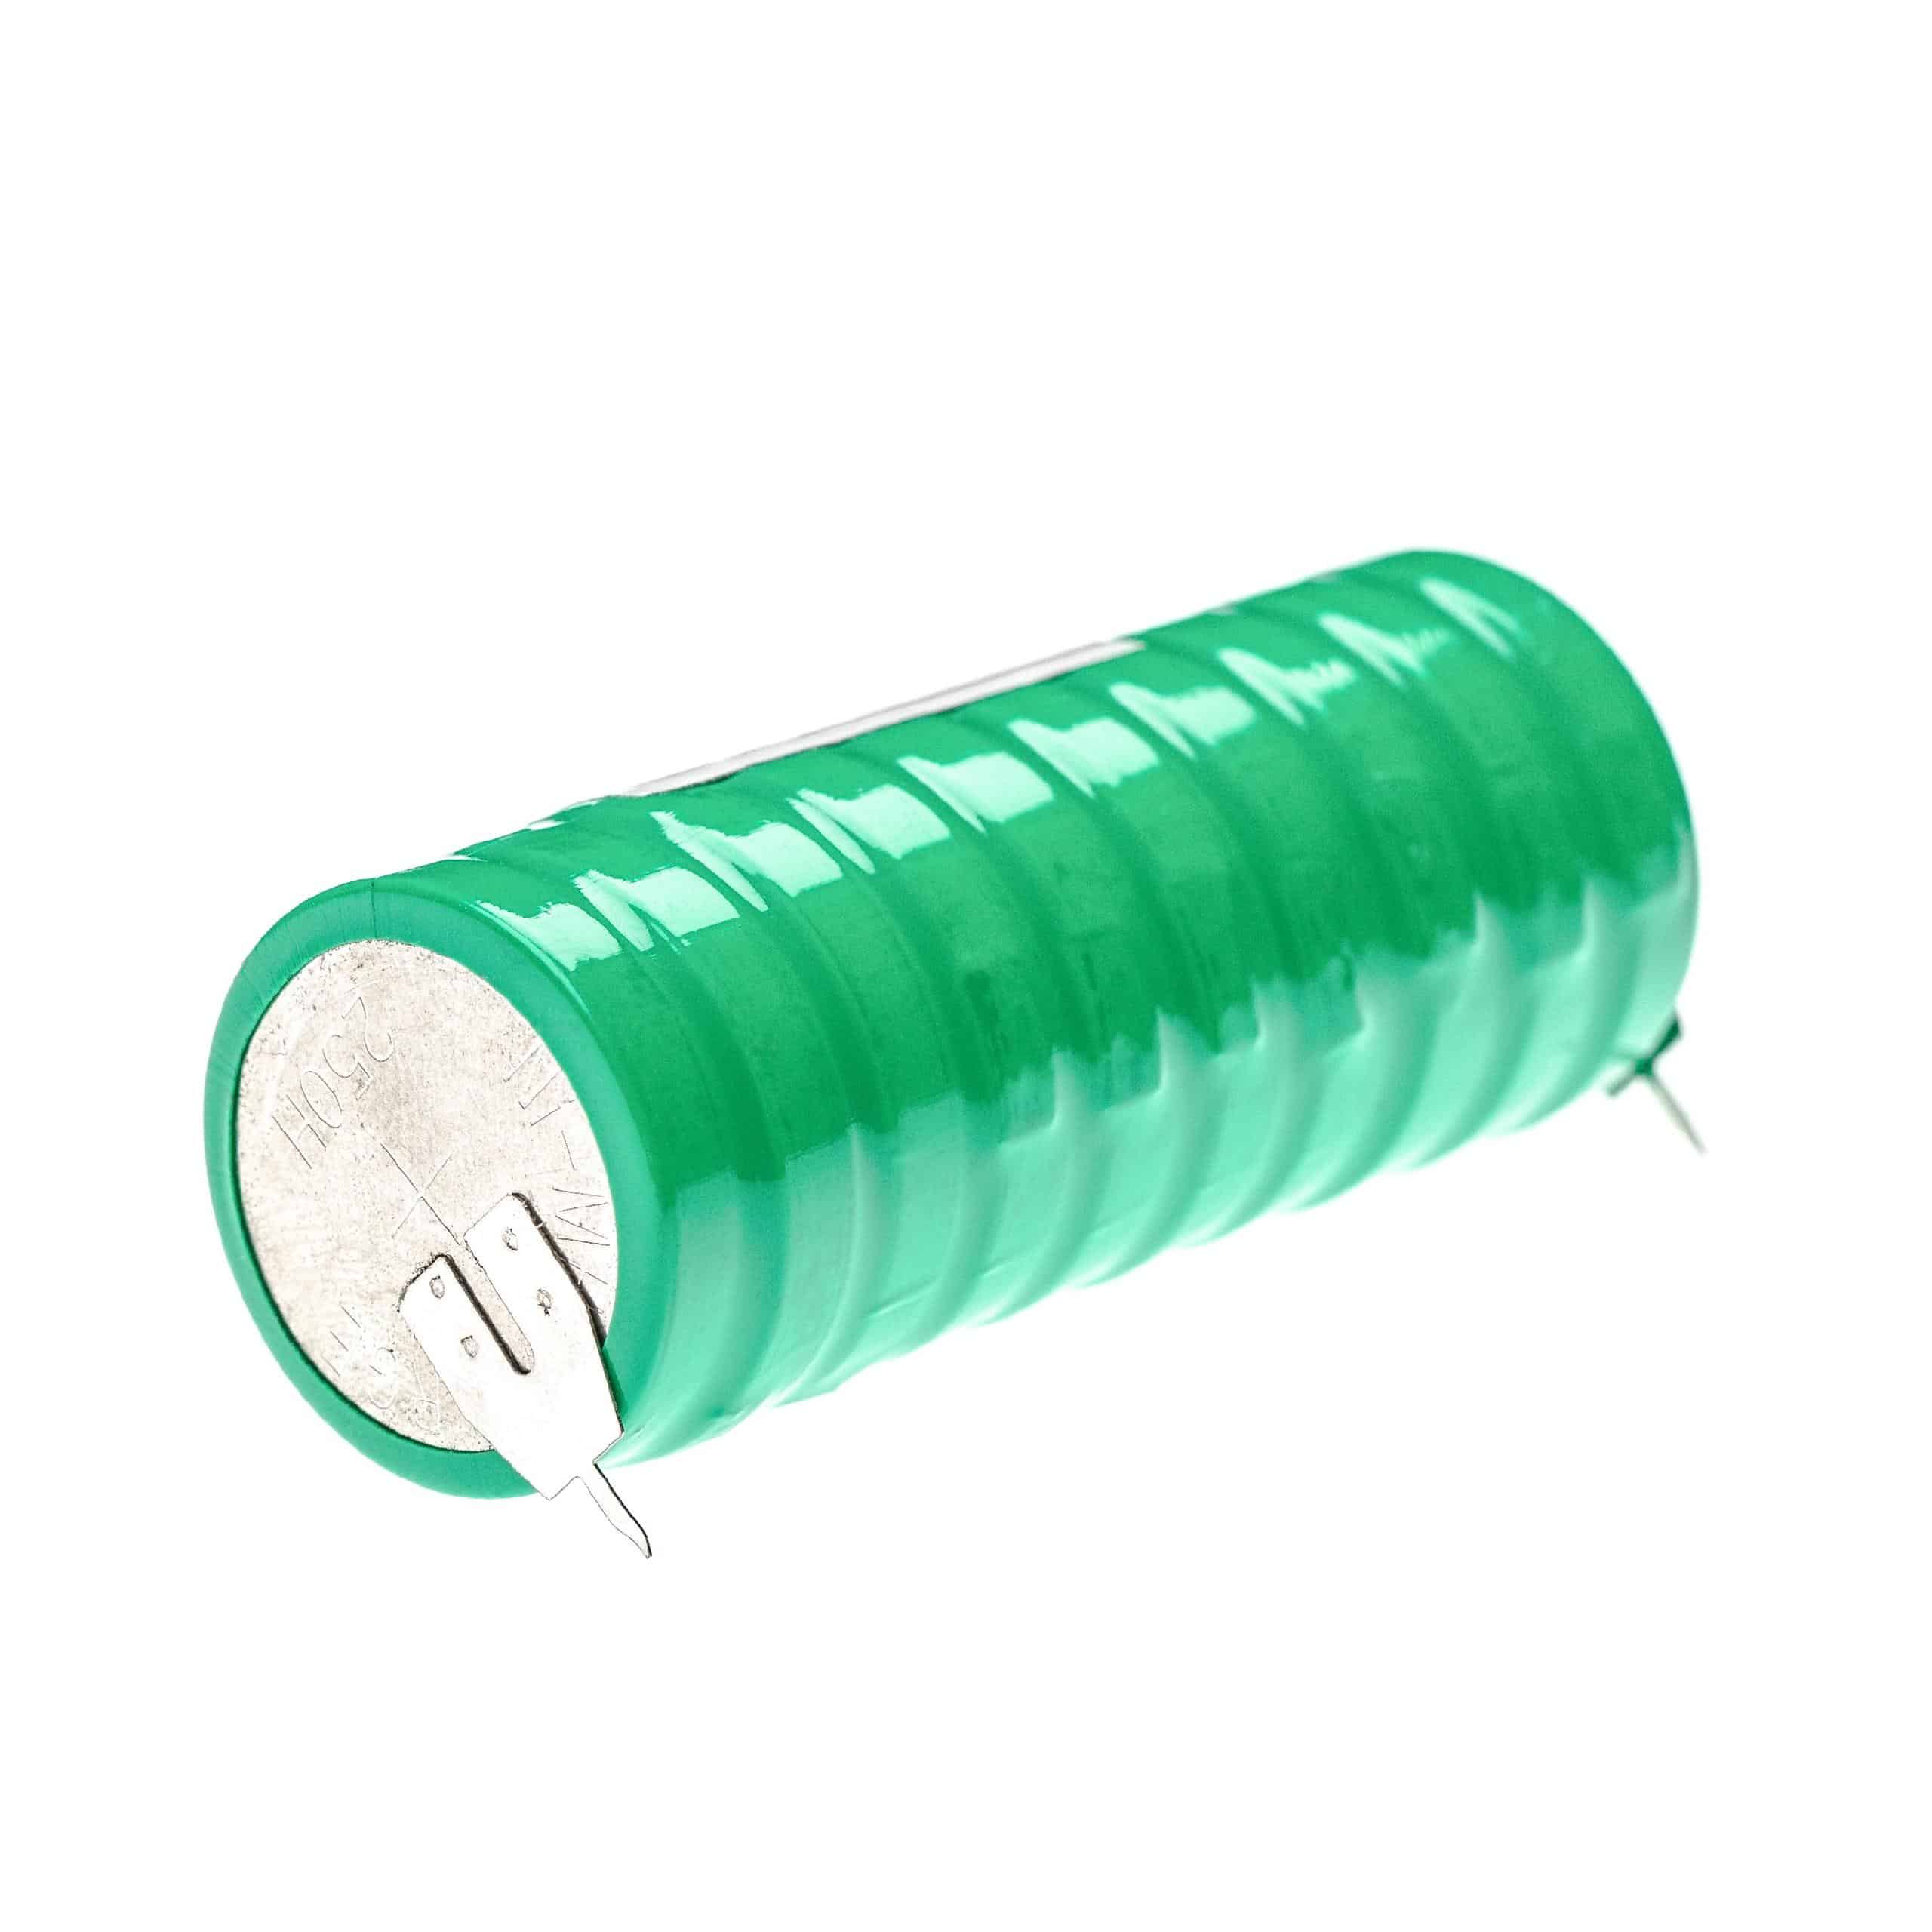 Button Cell Battery (10x Cell) Type V250H for Model Building Solar Lamps etc. - 250mAh 12V NiMH